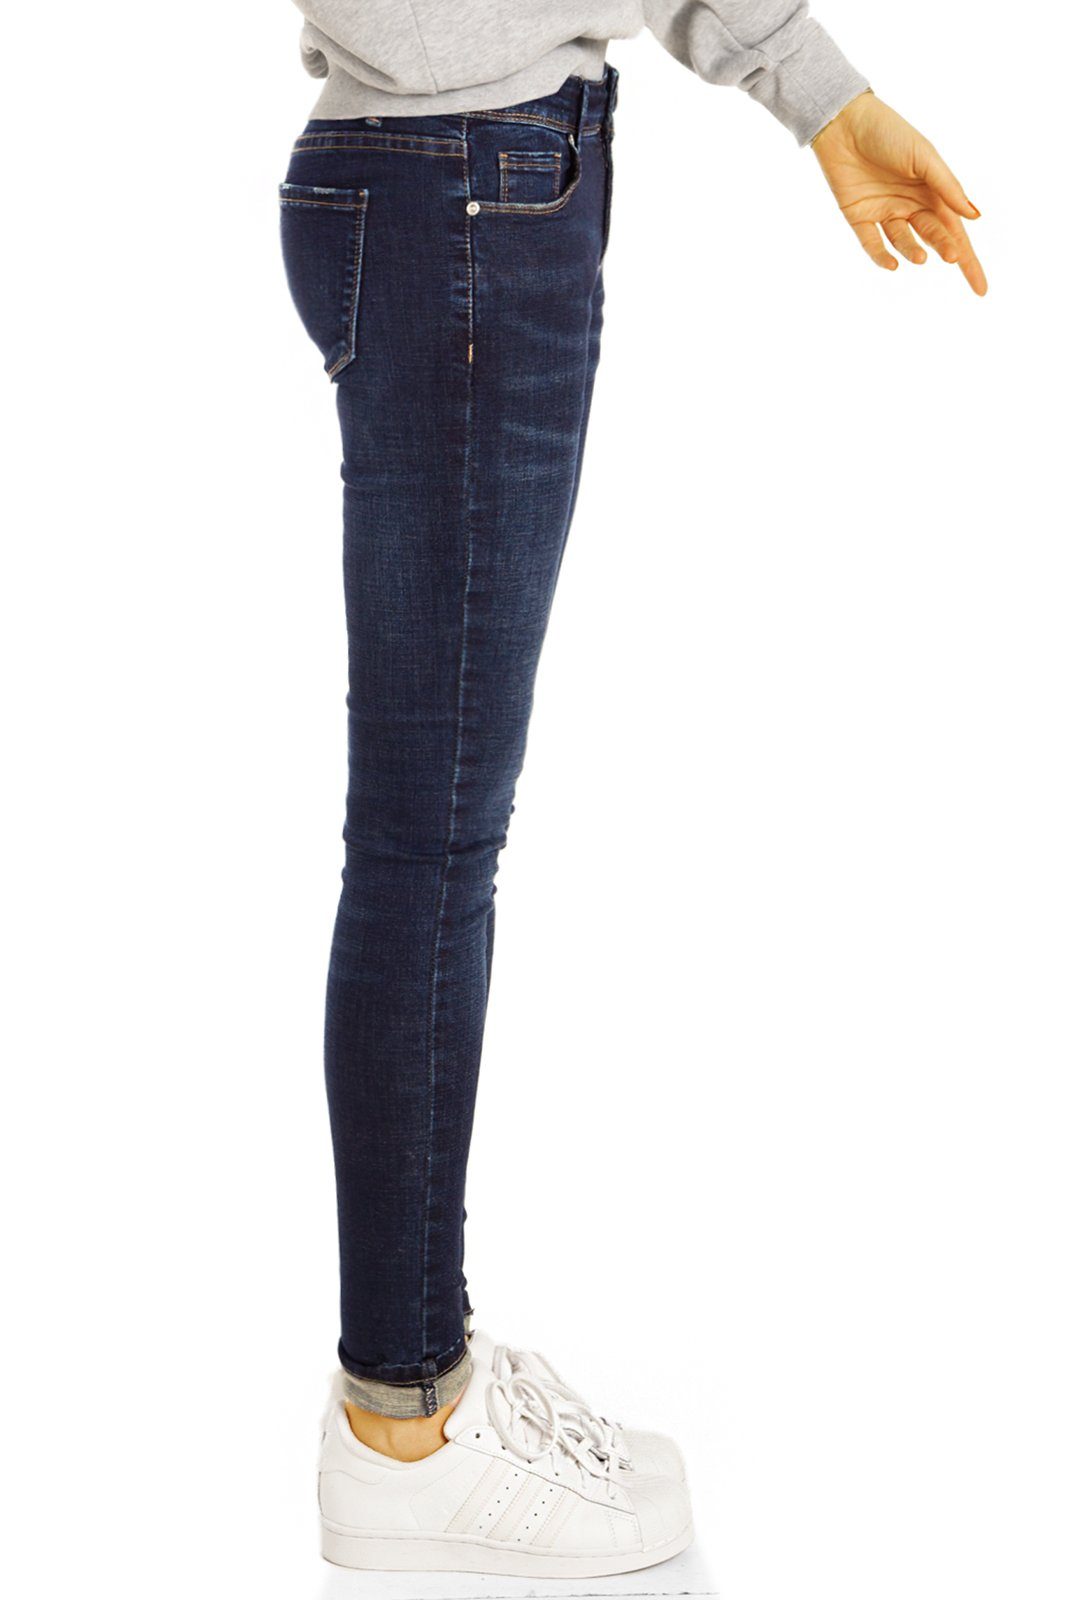 - stretch Stretch-Anteil, mit Skinny-fit-Jeans Hosen Damen Jeans 5-Pocket-Style Skinny j15k-2 be styled - Hüftjeans Fit Röhrenjeans denim